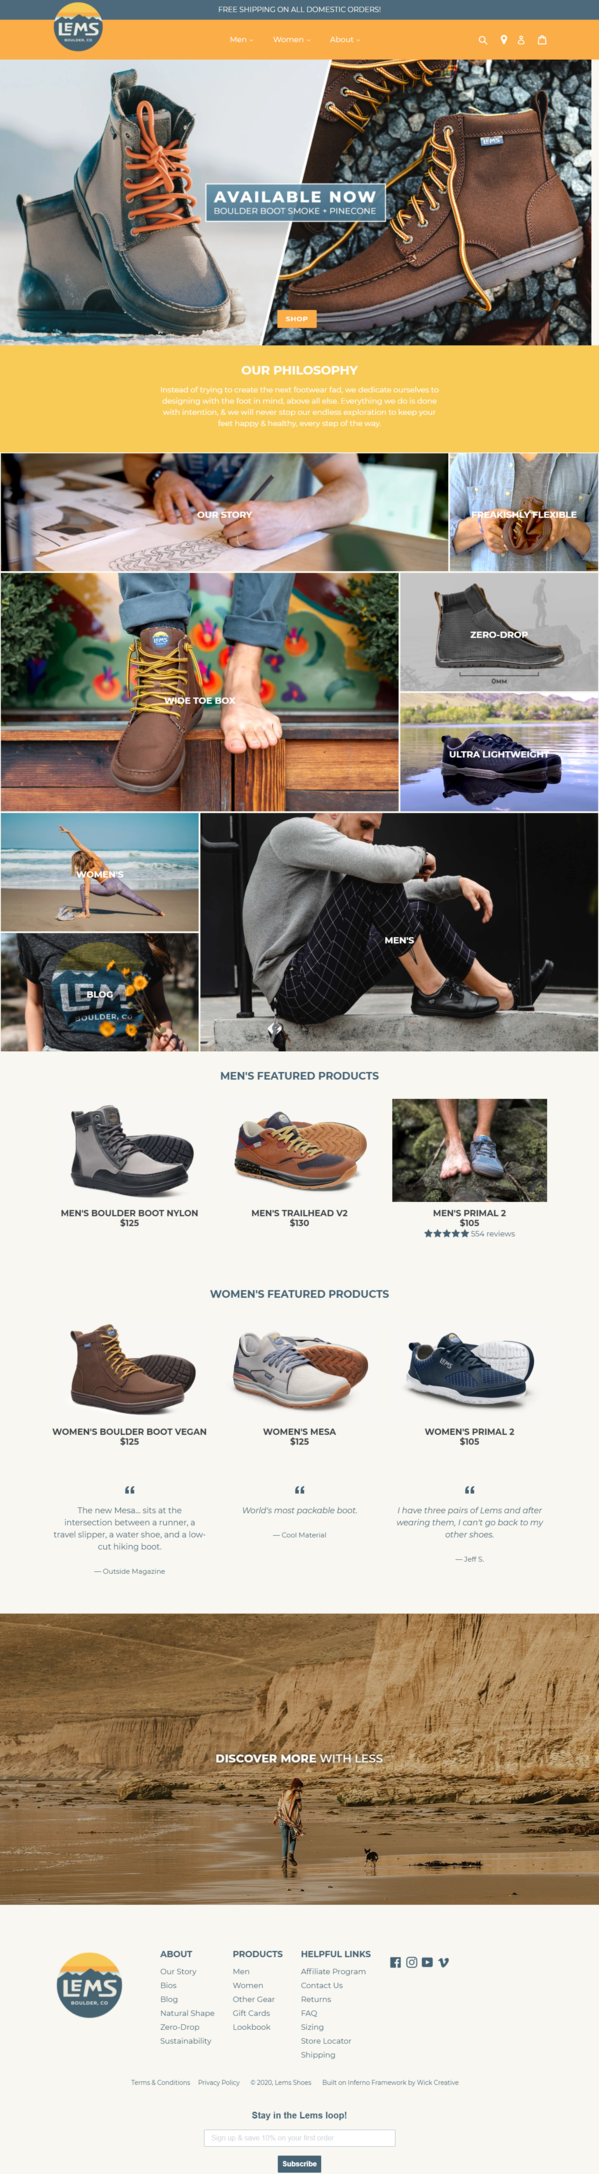 Lems Shoes & Boots - Zero Drop Minimalist Footwear - Barefoot Feel_ - www.lemsshoes.com.png